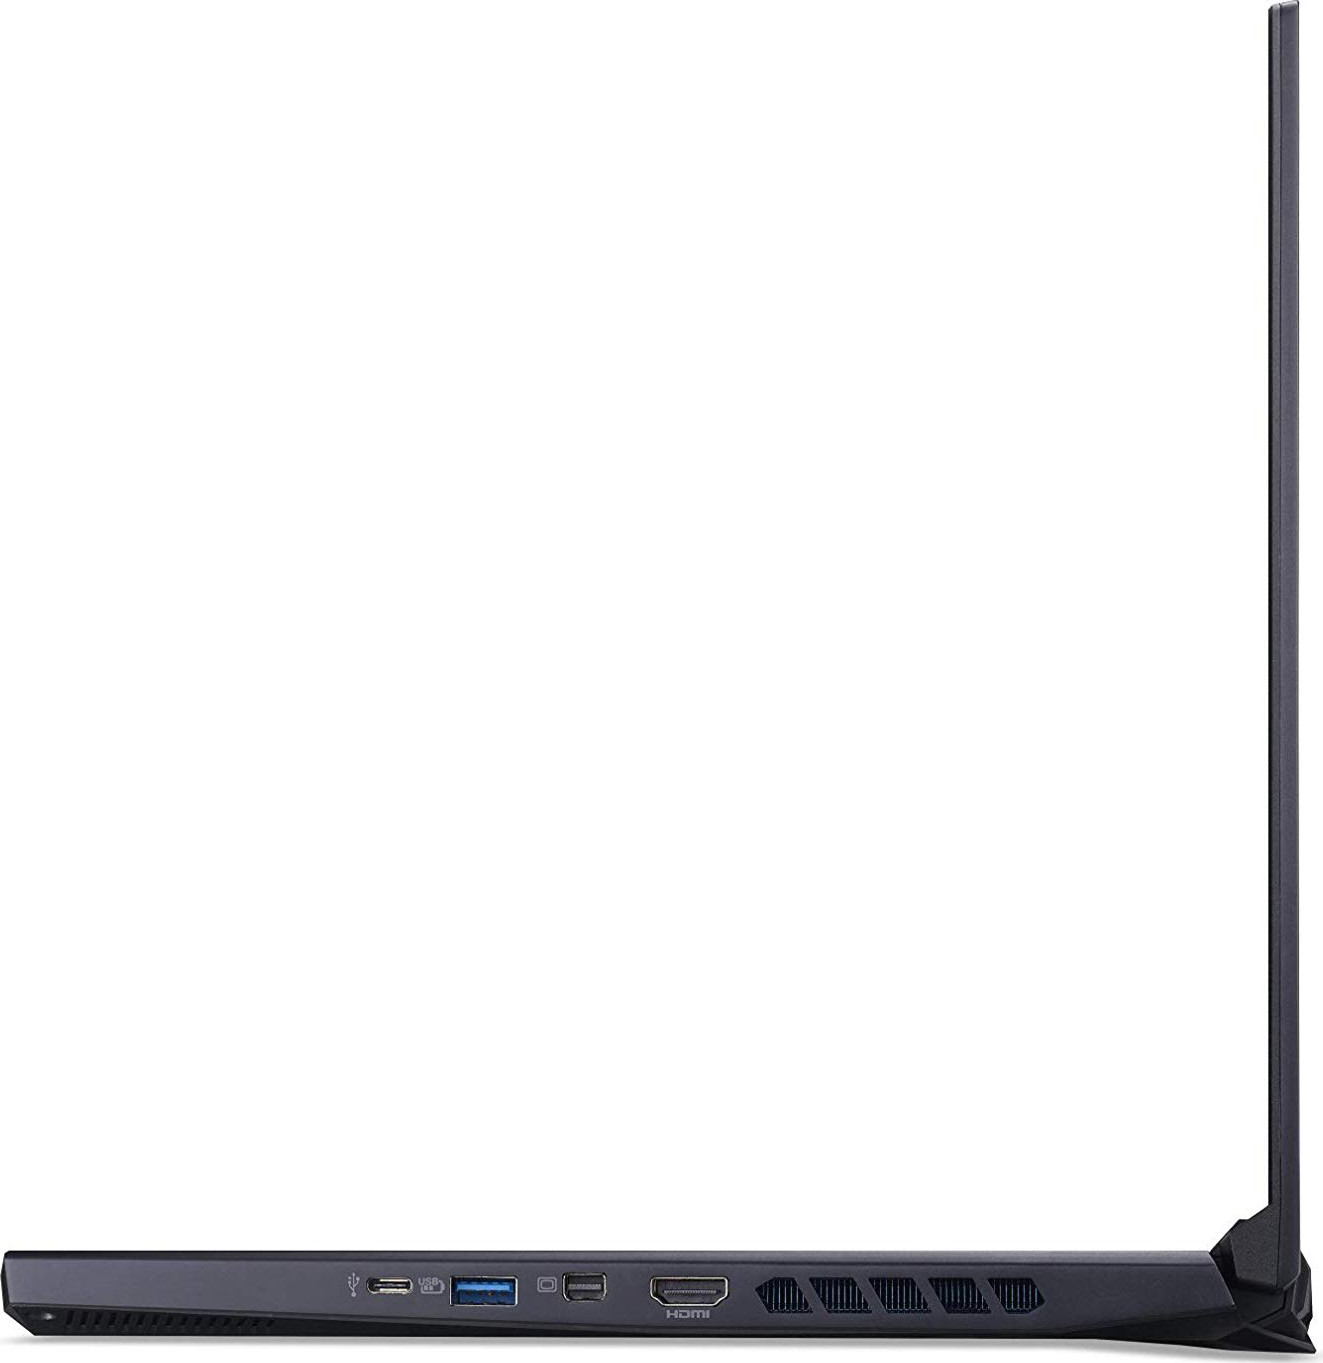 Acer Predator Helios 300 Gaming Laptop PC, 15.6" Full HD 144Hz 3ms IPS Display, Intel i7-9750H, GTX 1660 Ti 6GB, 16GB DDR4, 256GB PCIe NVMe SSD, Backlit Keyboard, PH315-52-78VL